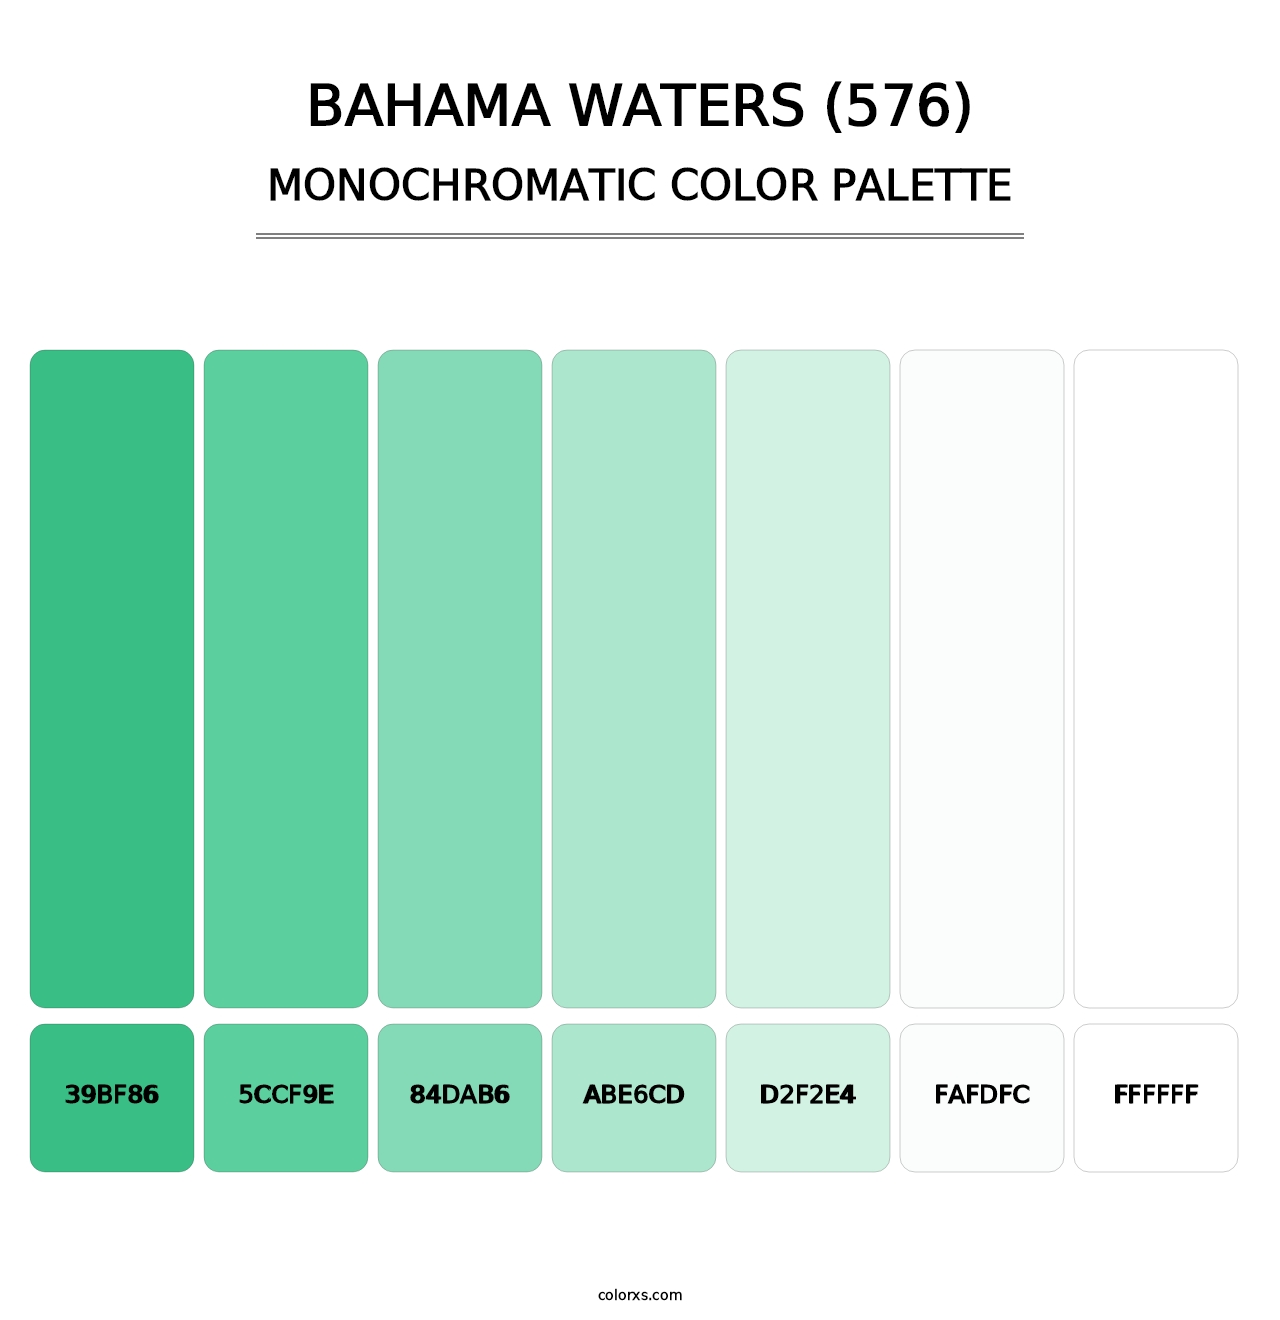 Bahama Waters (576) - Monochromatic Color Palette